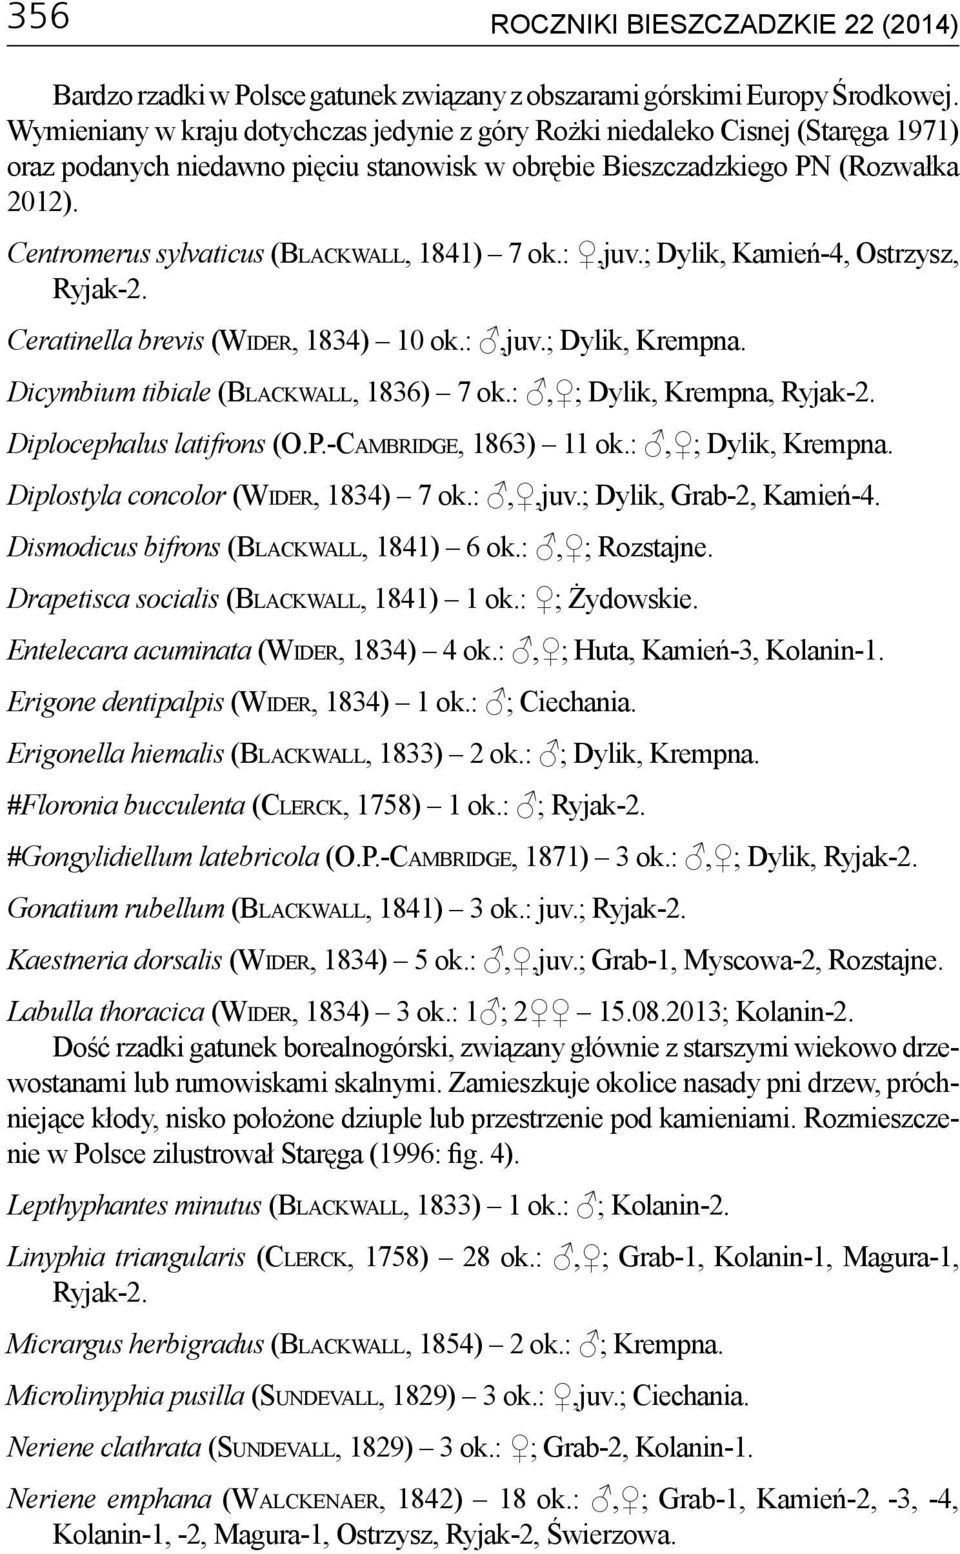 Centromerus sylvaticus (Blackwall, 1841) 7 ok.:,juv.; Dylik, Kamień-4, Ostrzysz, Ryjak-2. Ceratinella brevis (Wider, 1834) 10 ok.:,juv.; Dylik, Krempna. Dicymbium tibiale (Blackwall, 1836) 7 ok.